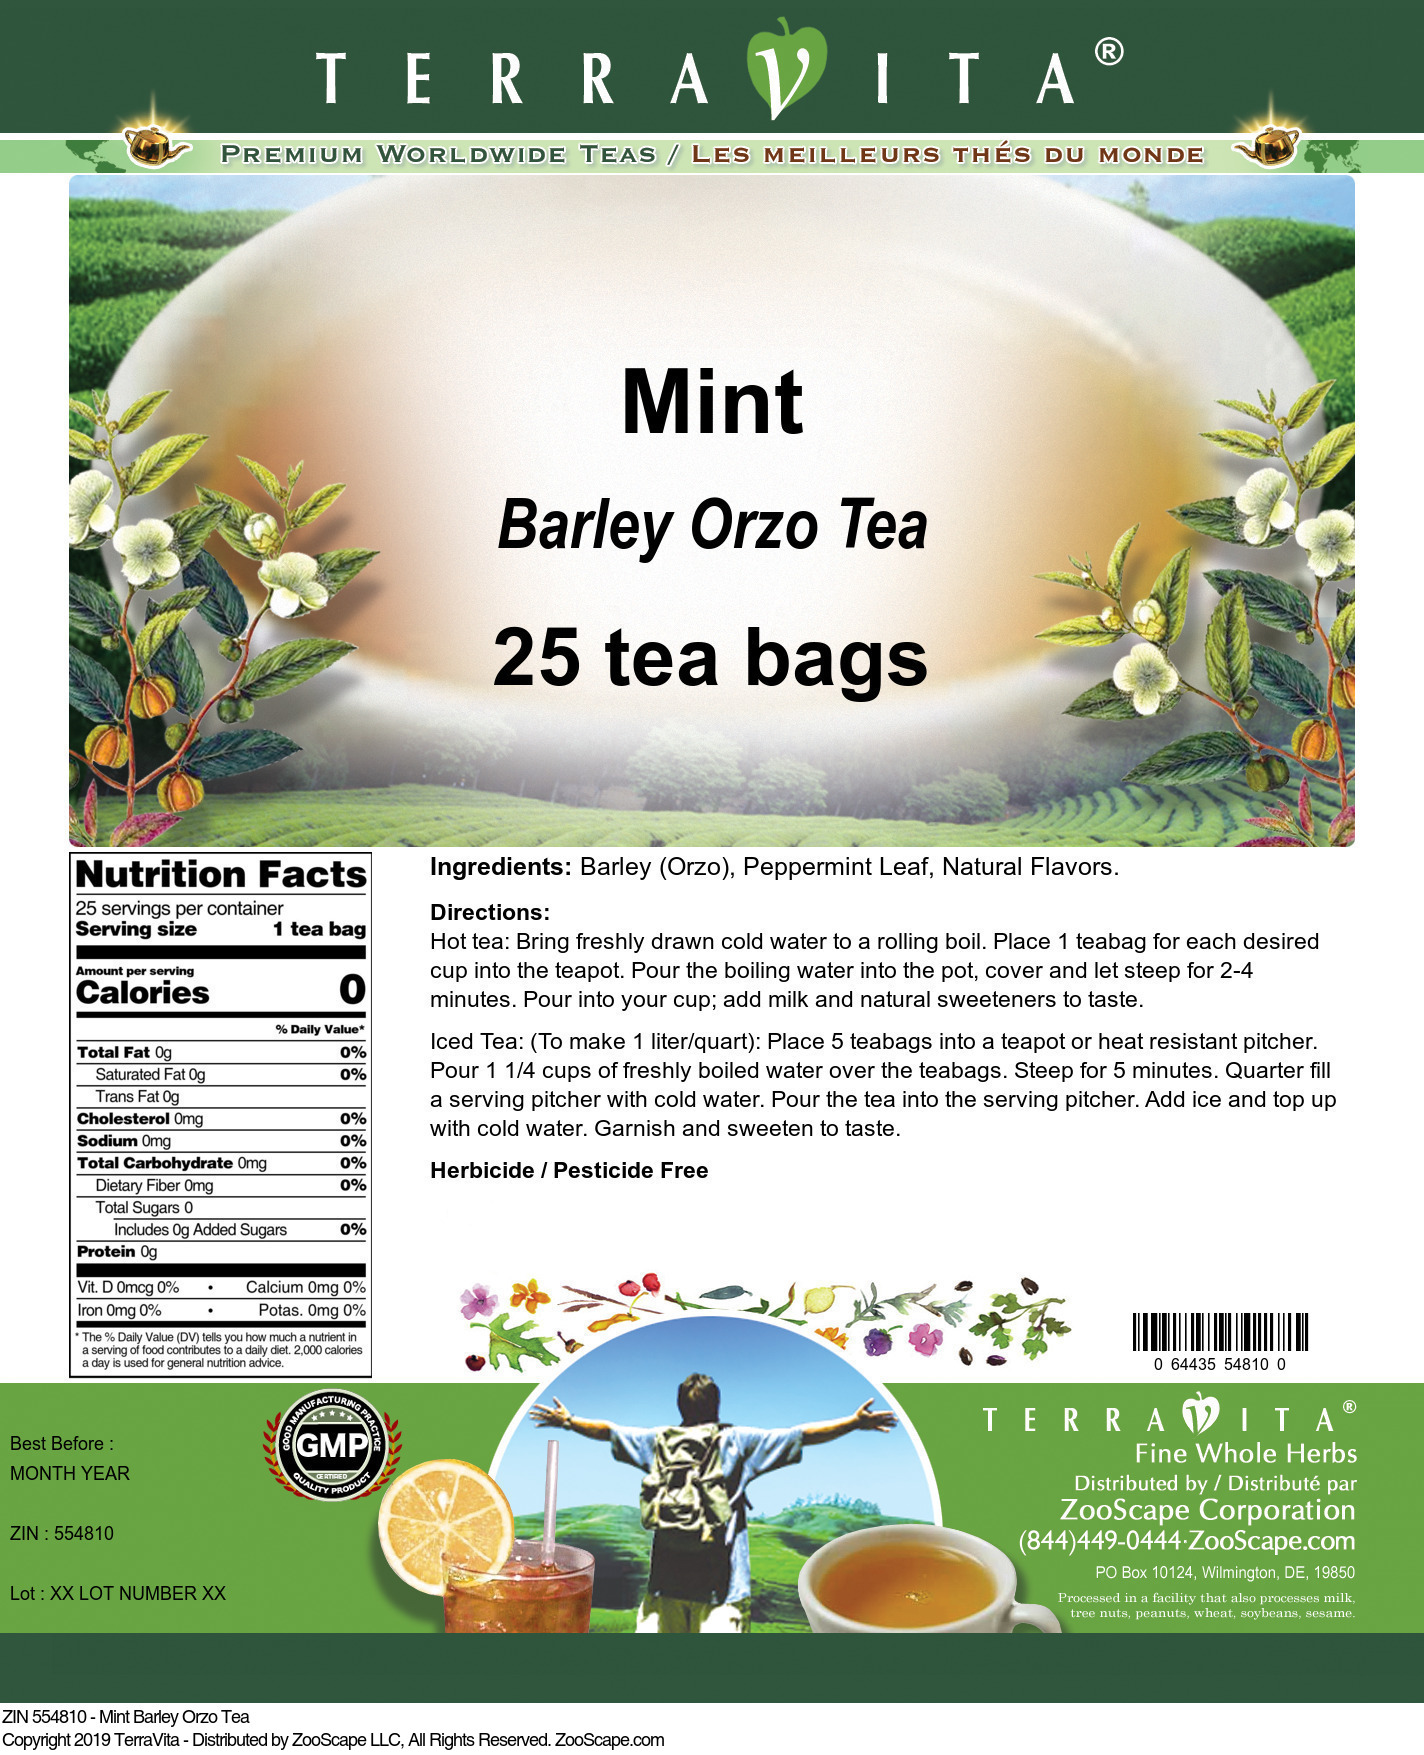 Mint Barley Orzo Tea - Label